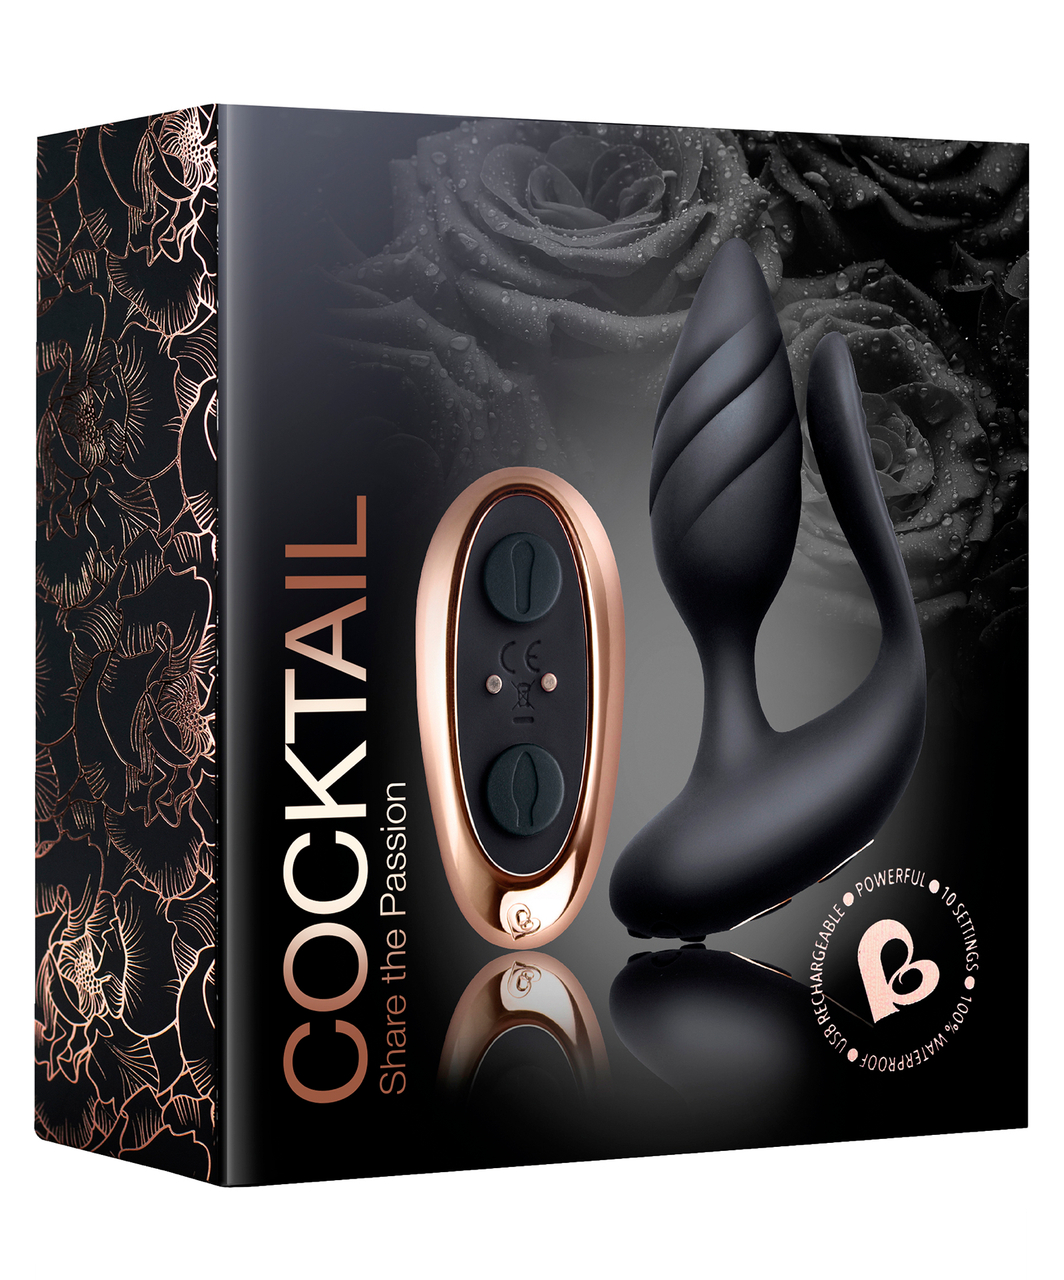 Rocks-Off Cocktail Anus & Vagina Dual Couples Stimulator